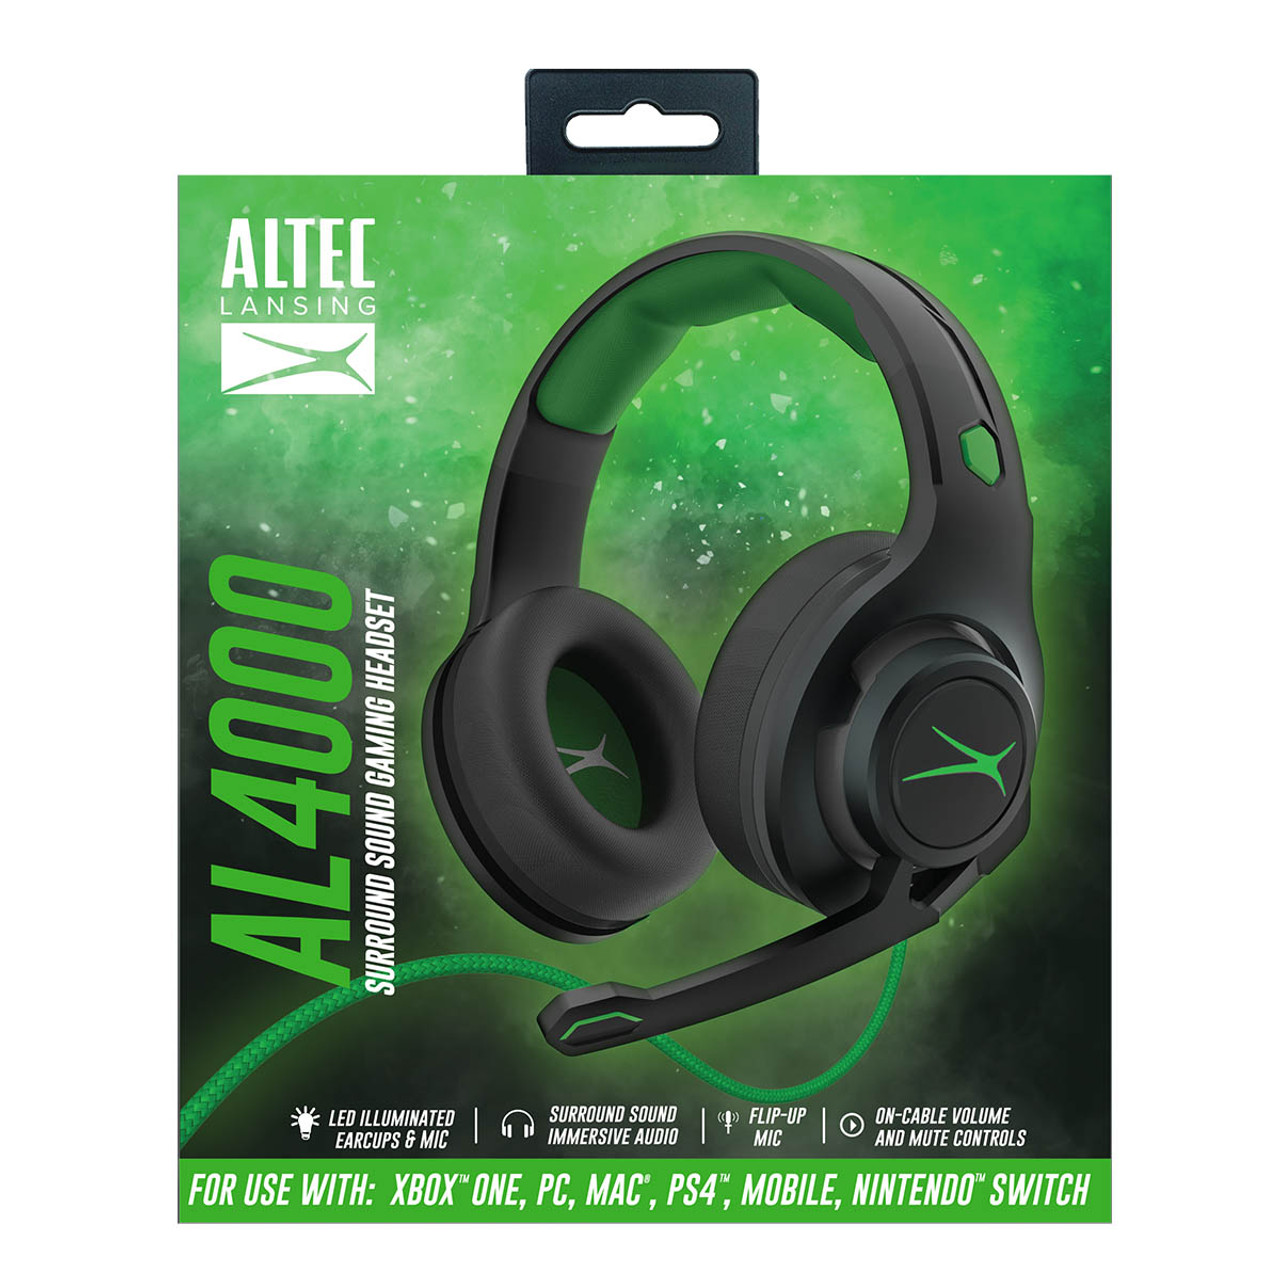 Altec Lansing AL2000 Gaming Headset Stereo Headphones product image